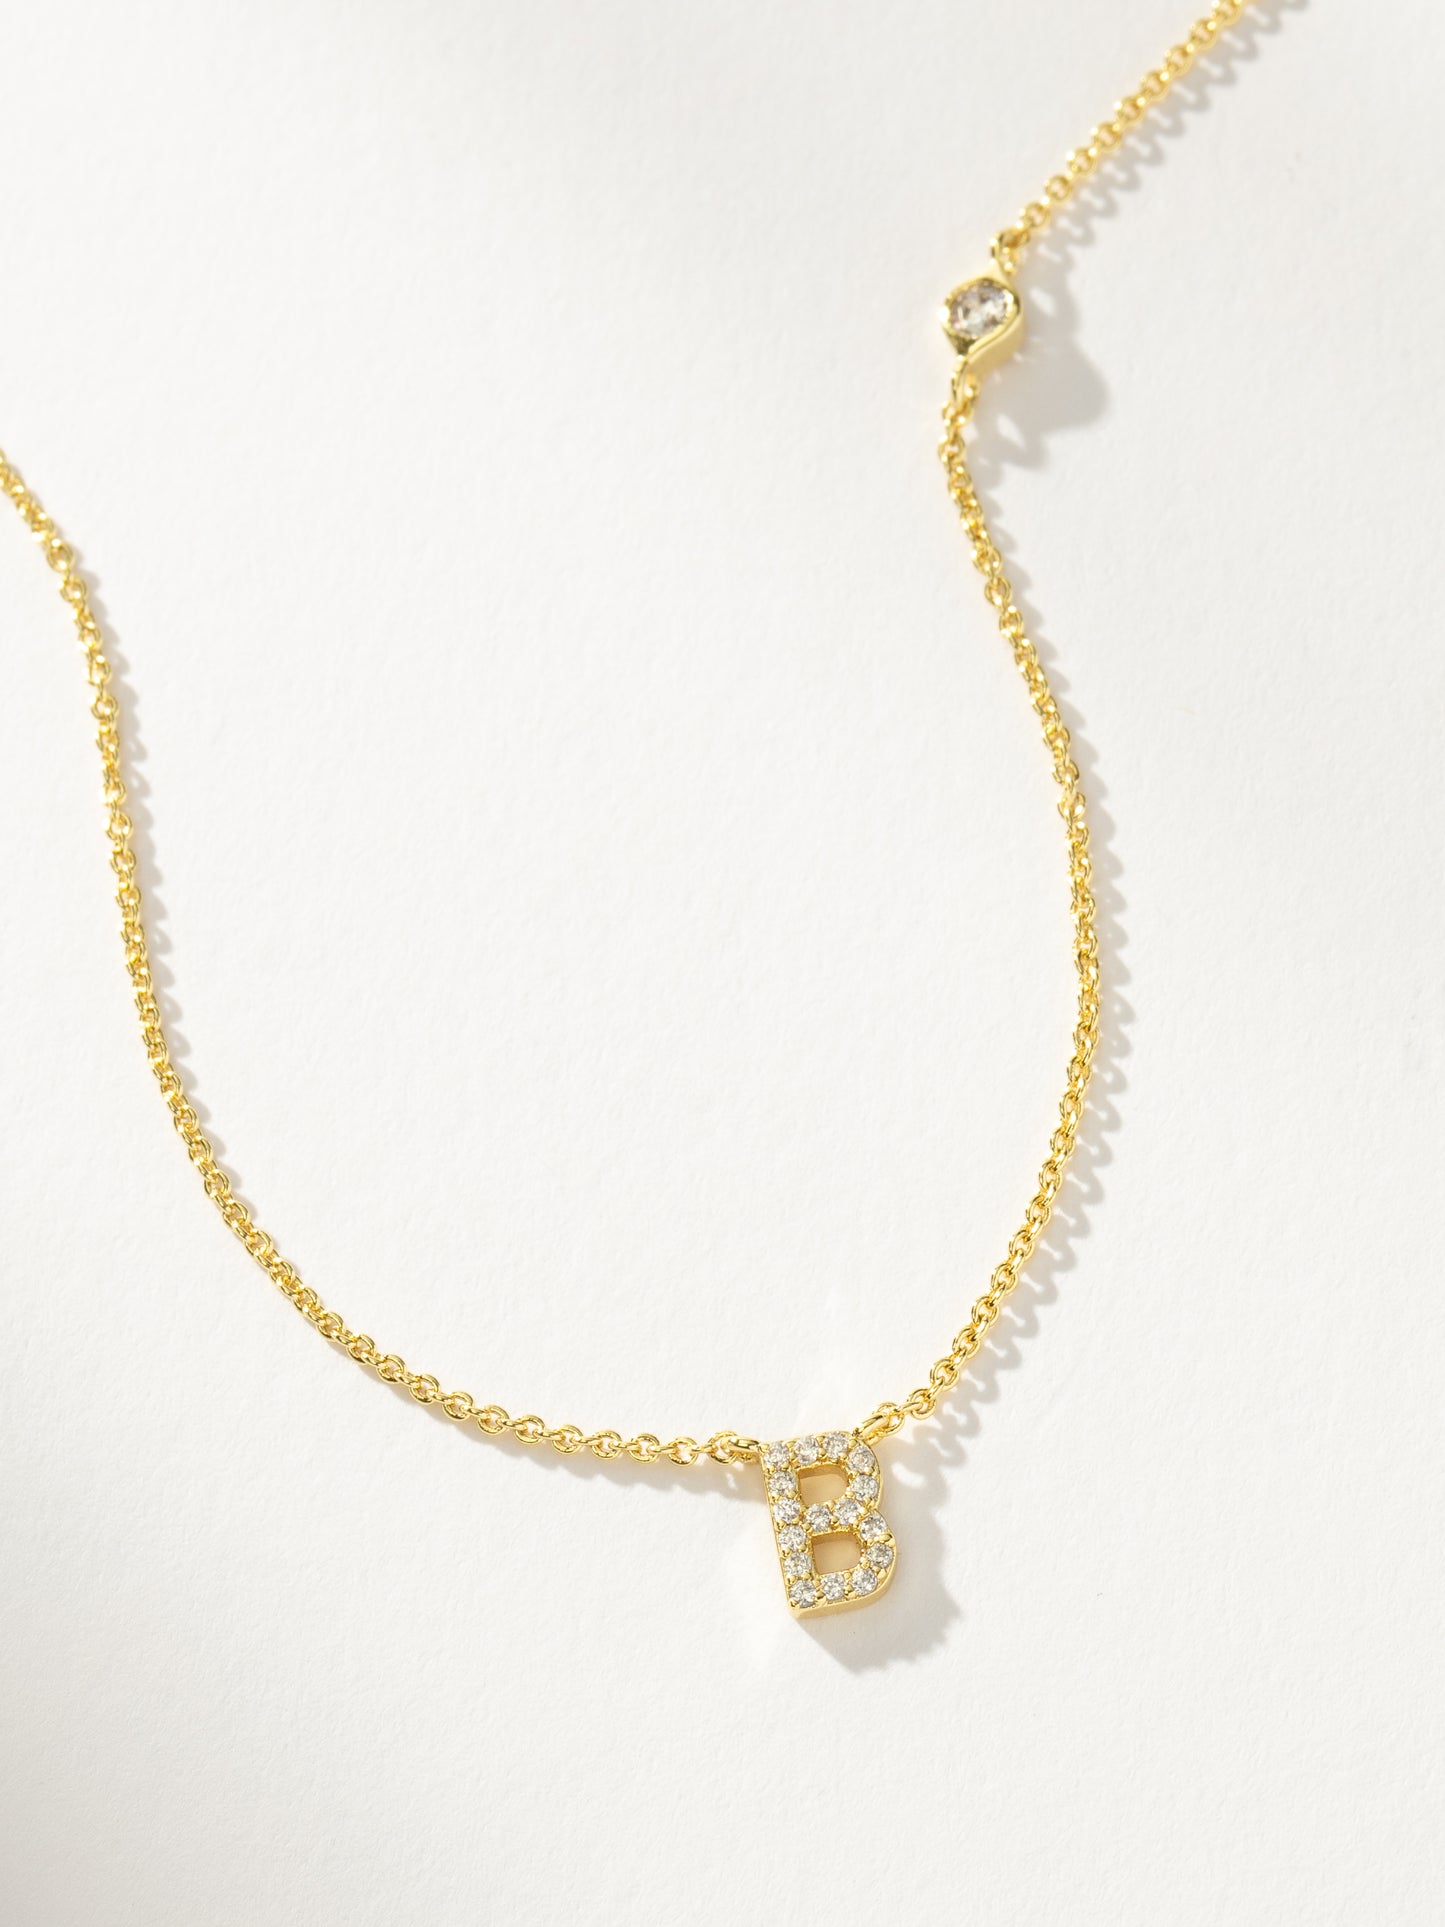 Pavé Initial Necklace | Gold B | Product Detail Image | Uncommon James